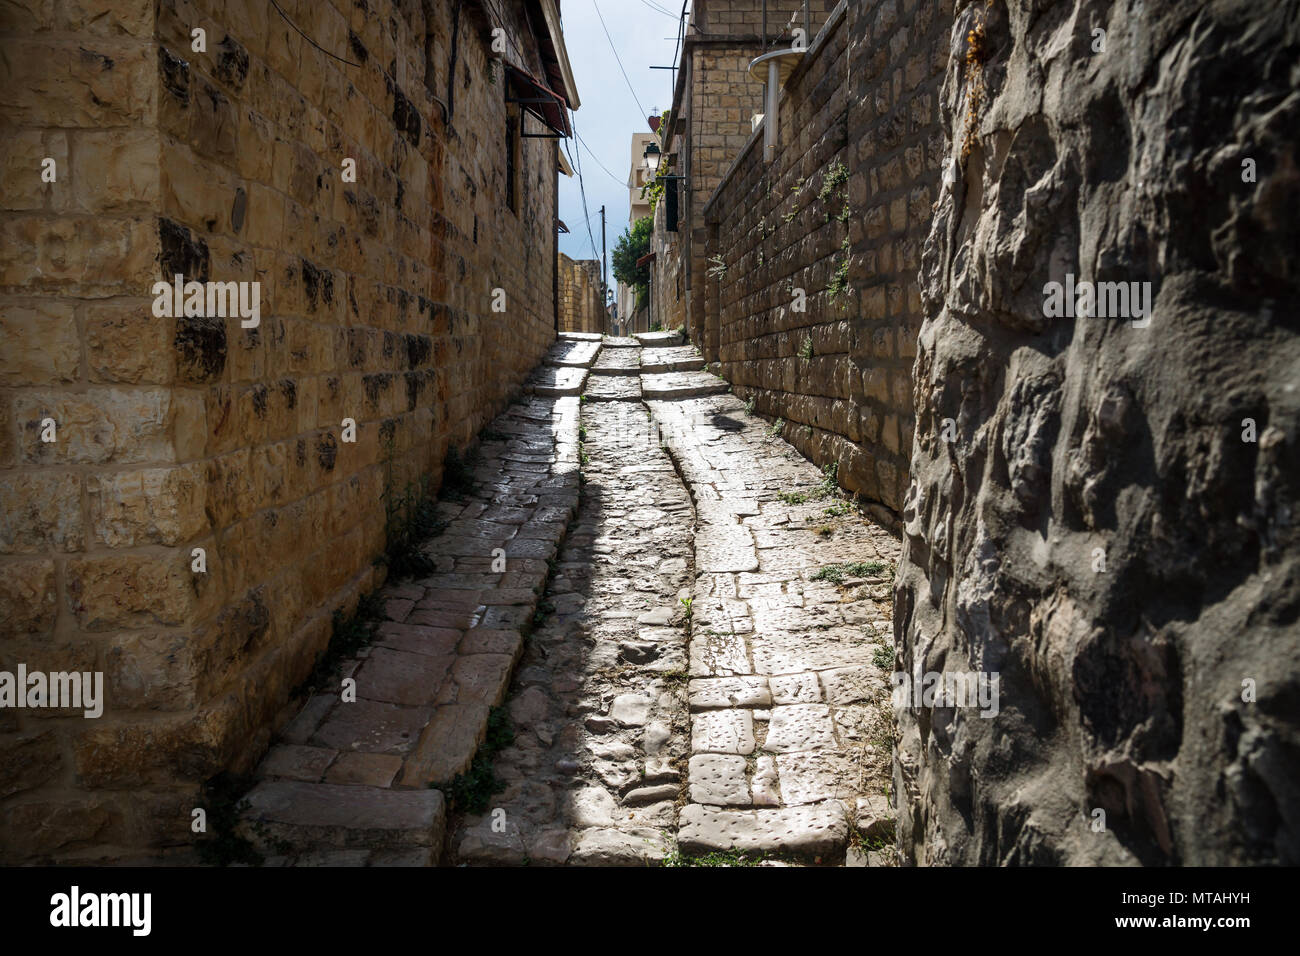 Narrow ancient streets in traditional town Deir el Qamar, Lebanon Stock Photo